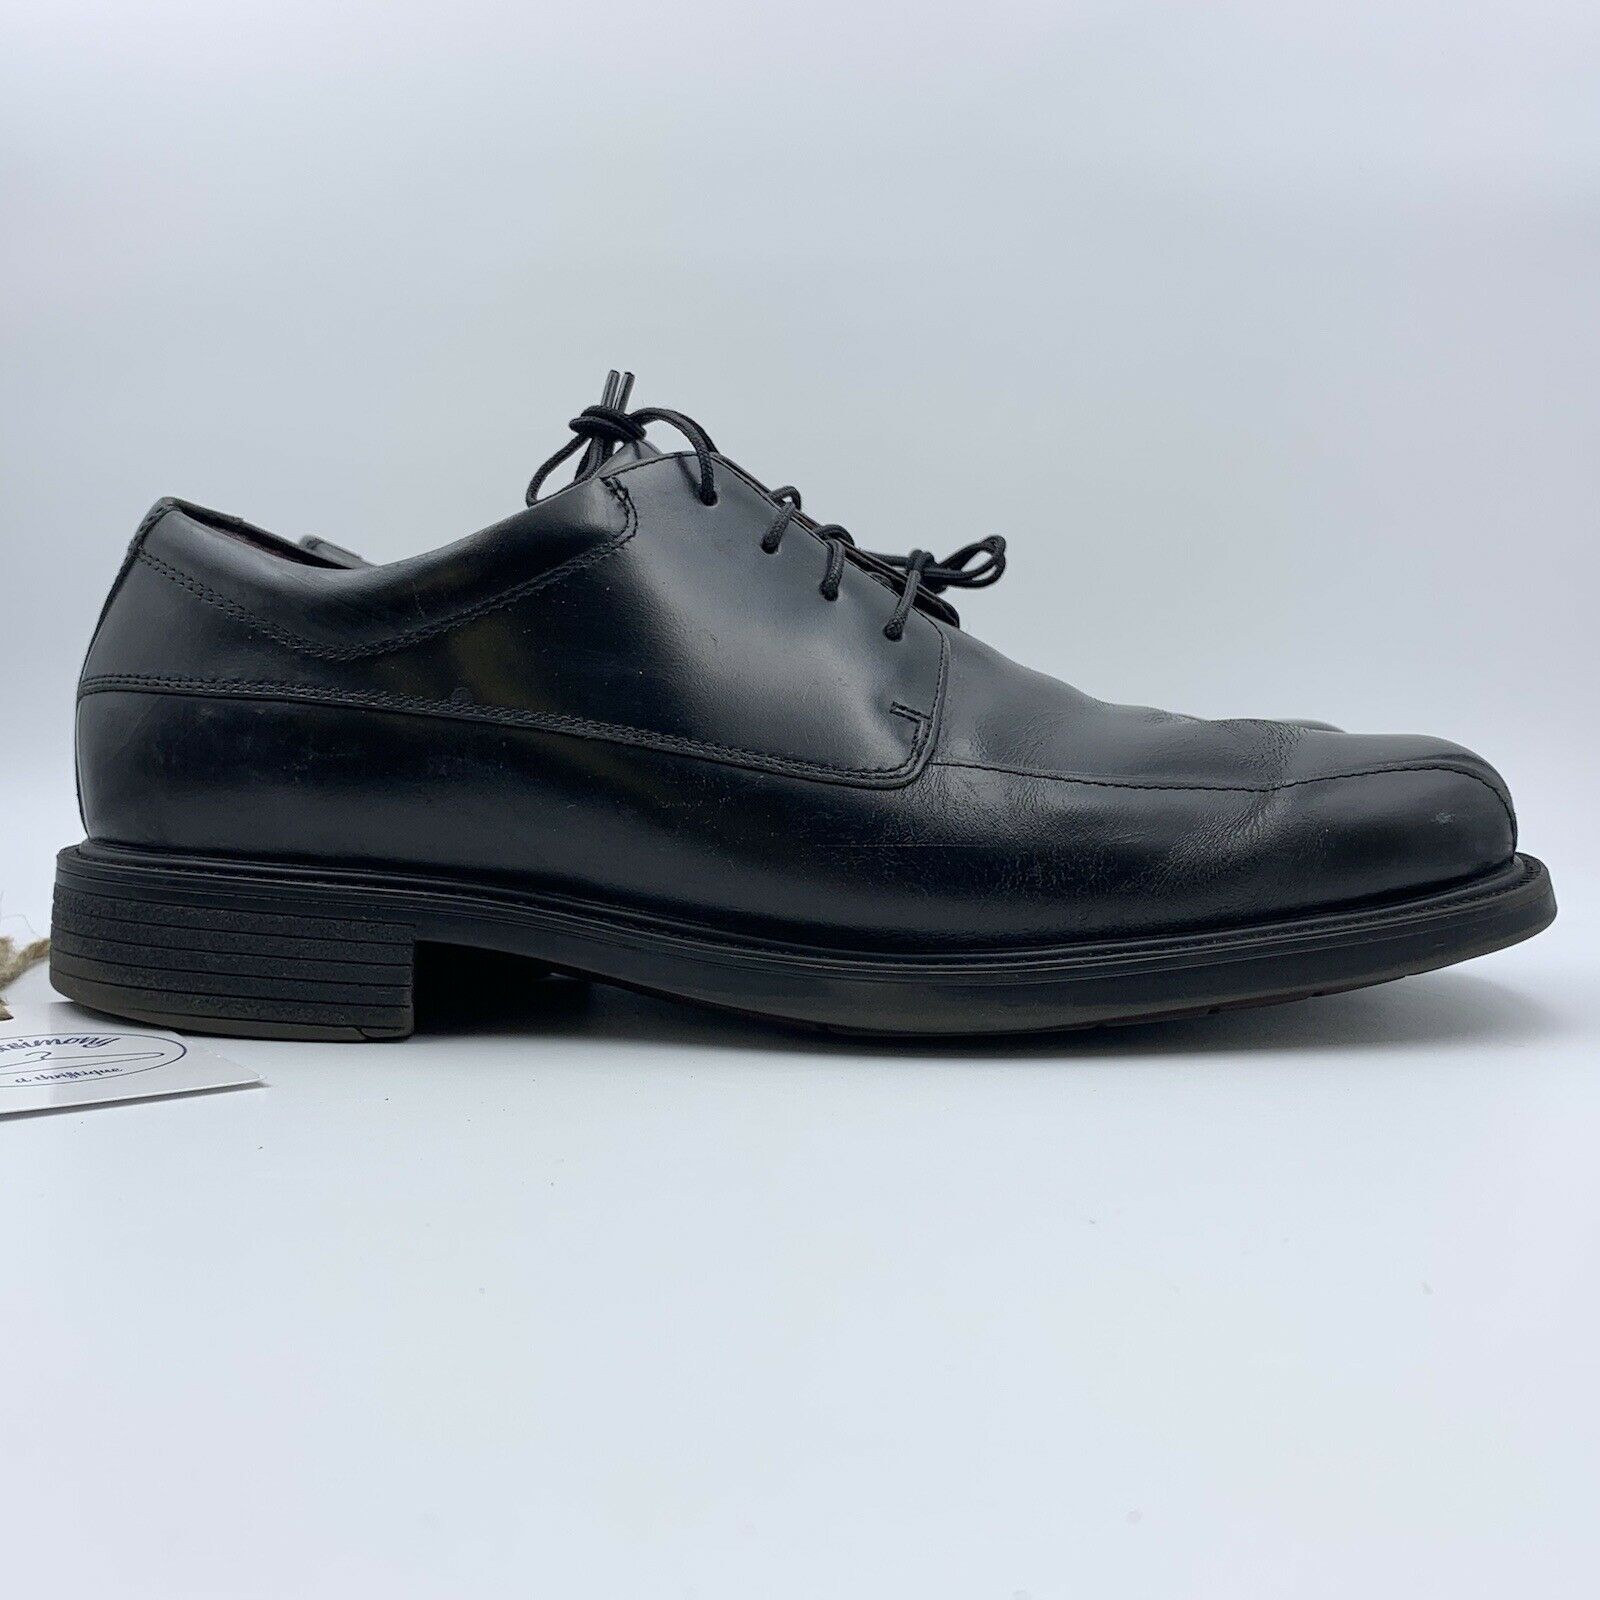 Rockport Mens Oxford Dress Shoes Leather Lace Up Apron Toe, Black - Size 10M